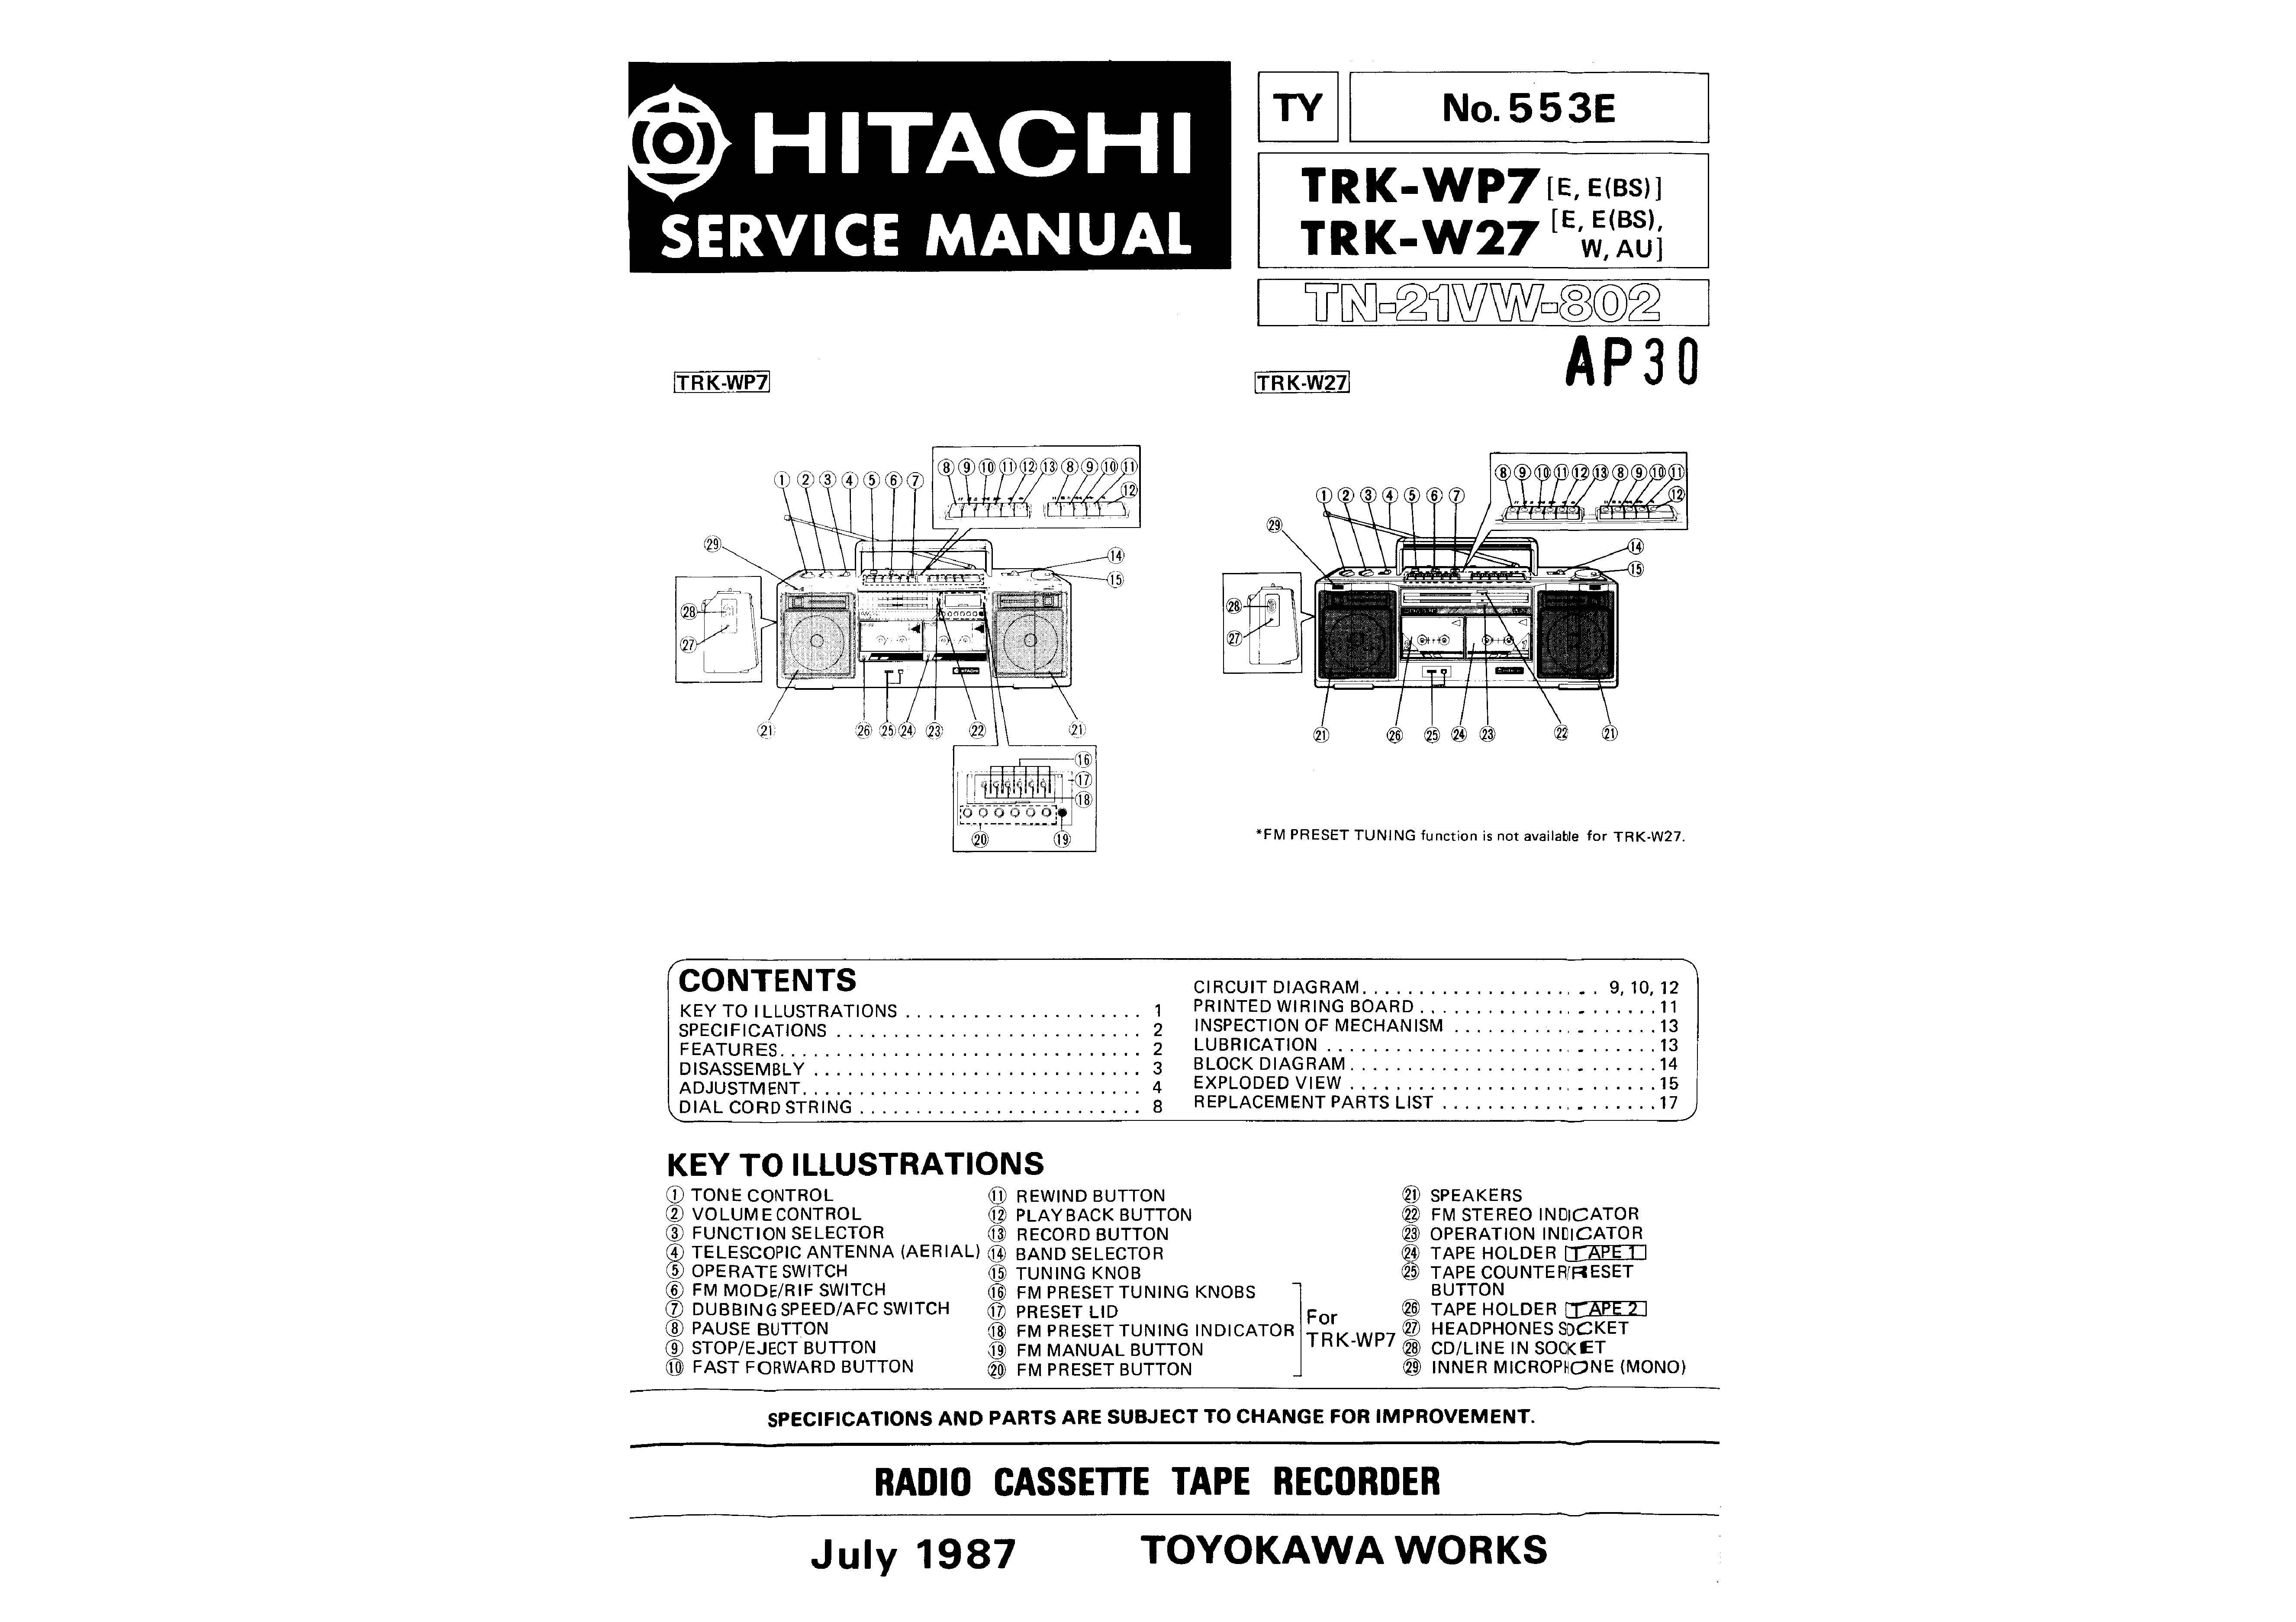 Hitachi TRK-WP7